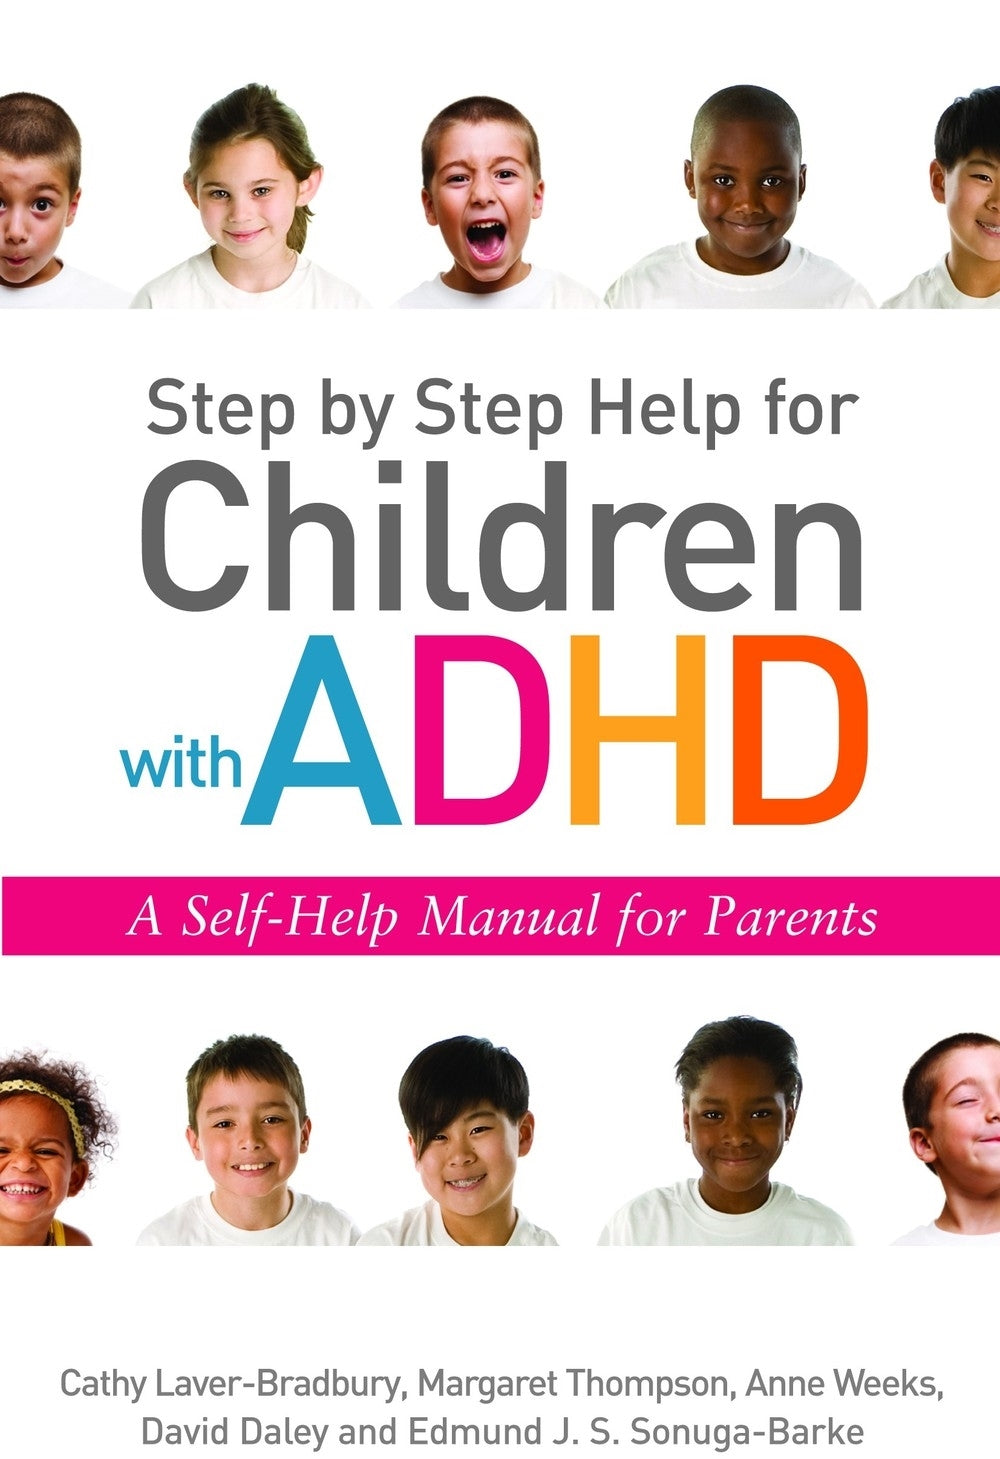 Step by Step Help for Children with ADHD by Anne Weeks, Cathy Laver-Bradbury, David Daley, Edmund J. S Sonuga-Barke, Margaret Thompson